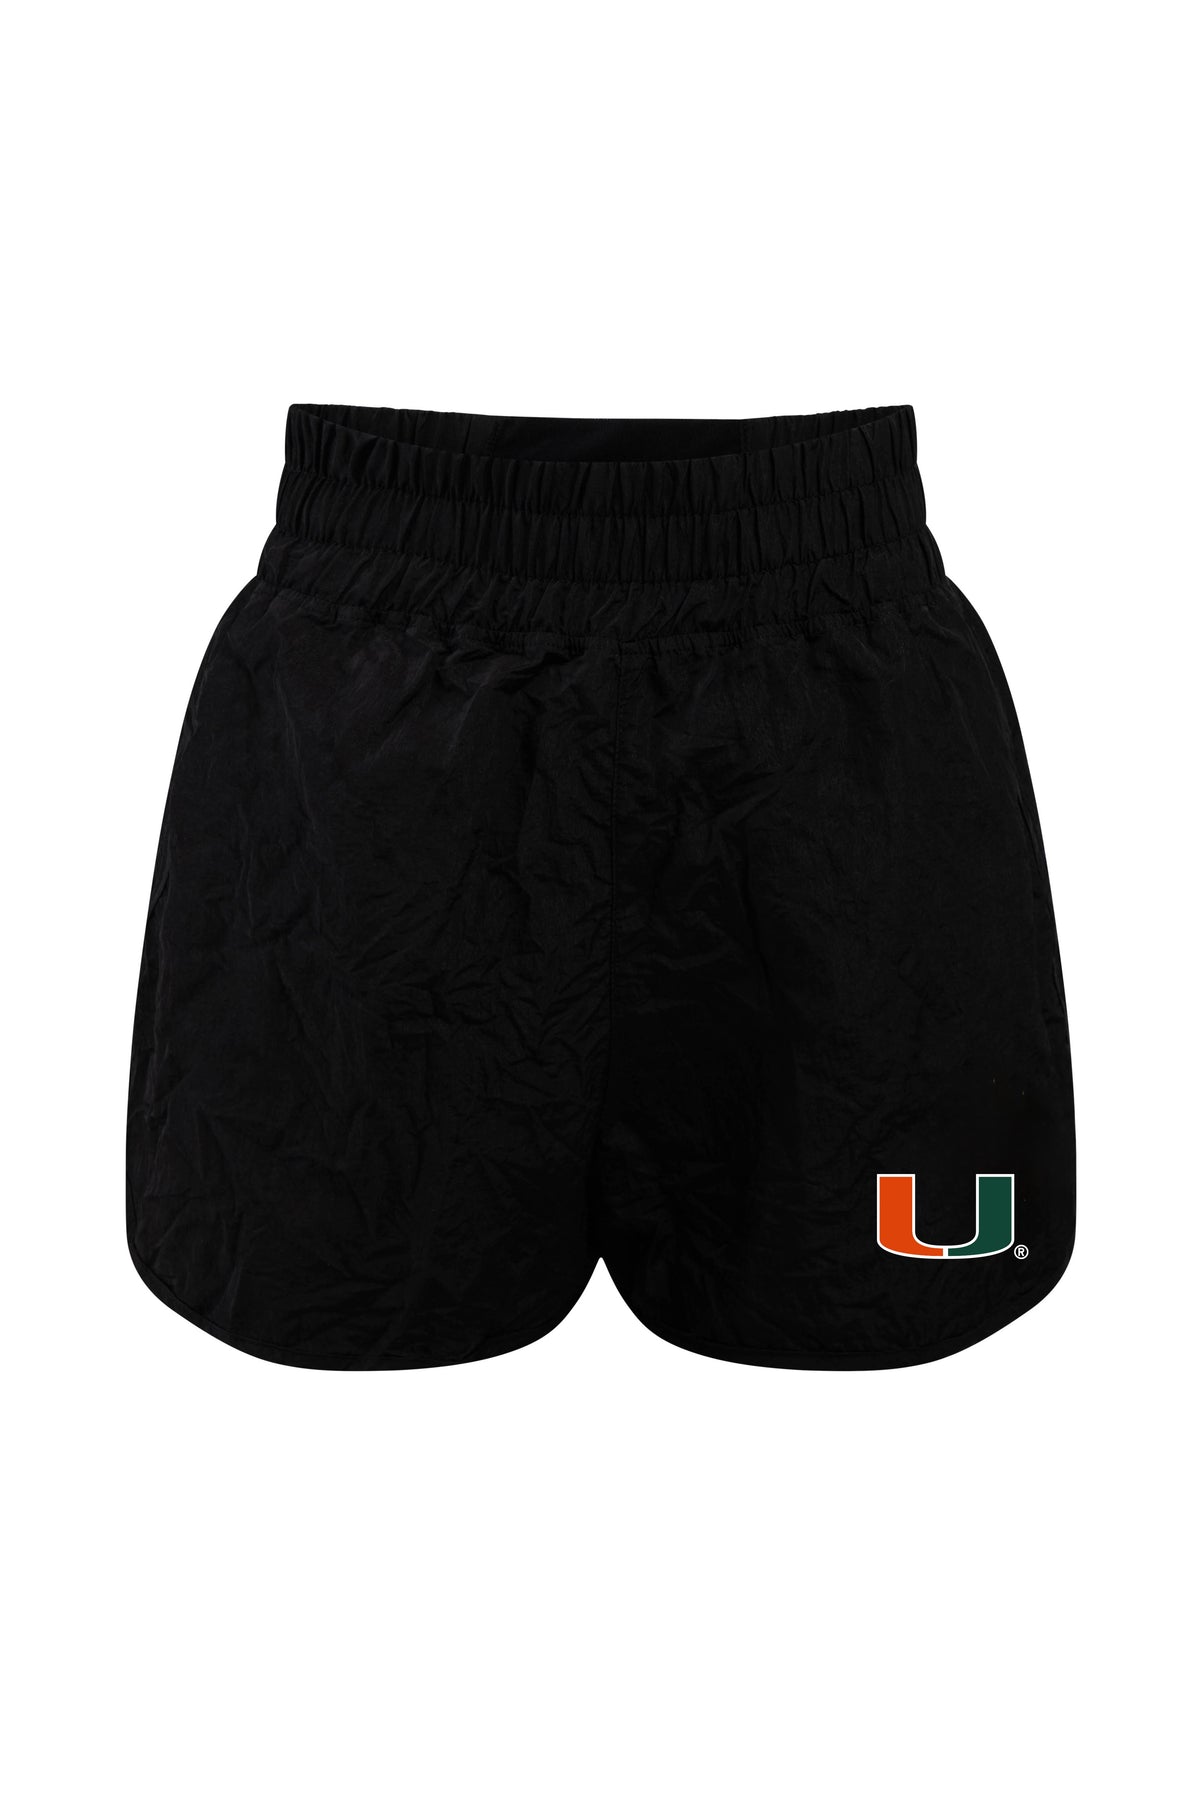 University of Miami Boxer Short